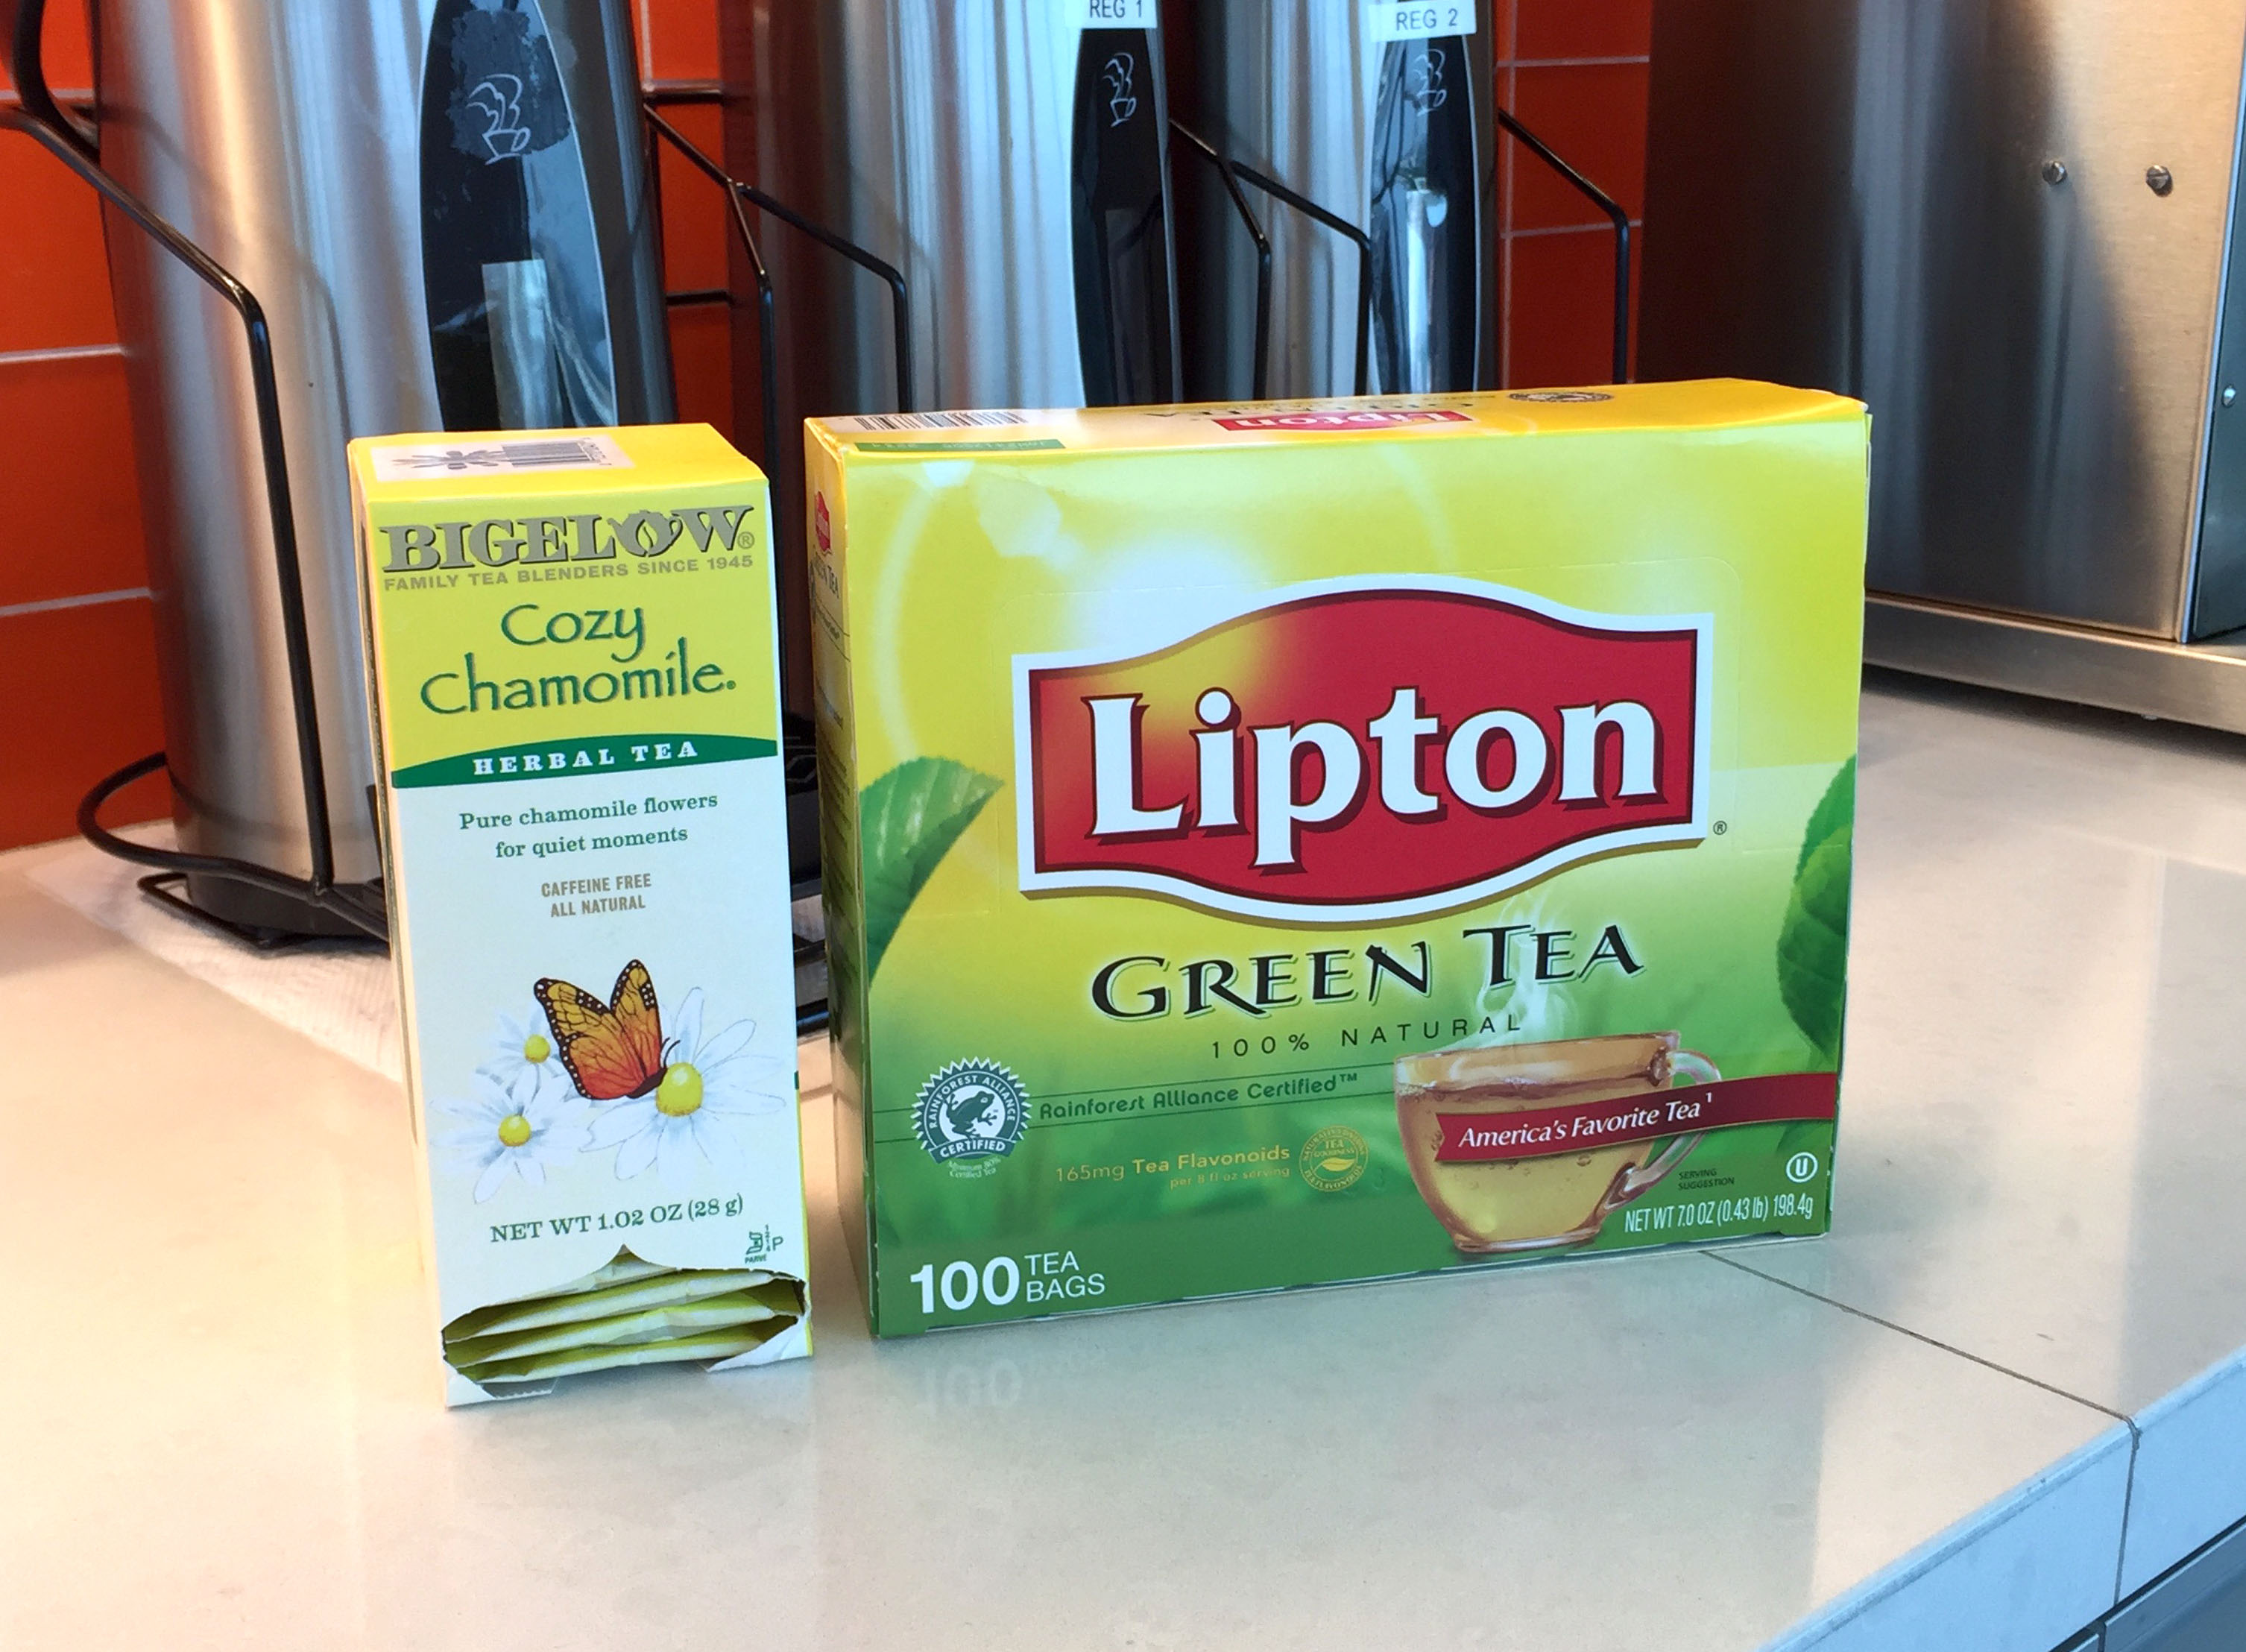 Photo showing Lipton Green Tea box and Bigelow Cozy Chamomile herbal tea in a box.